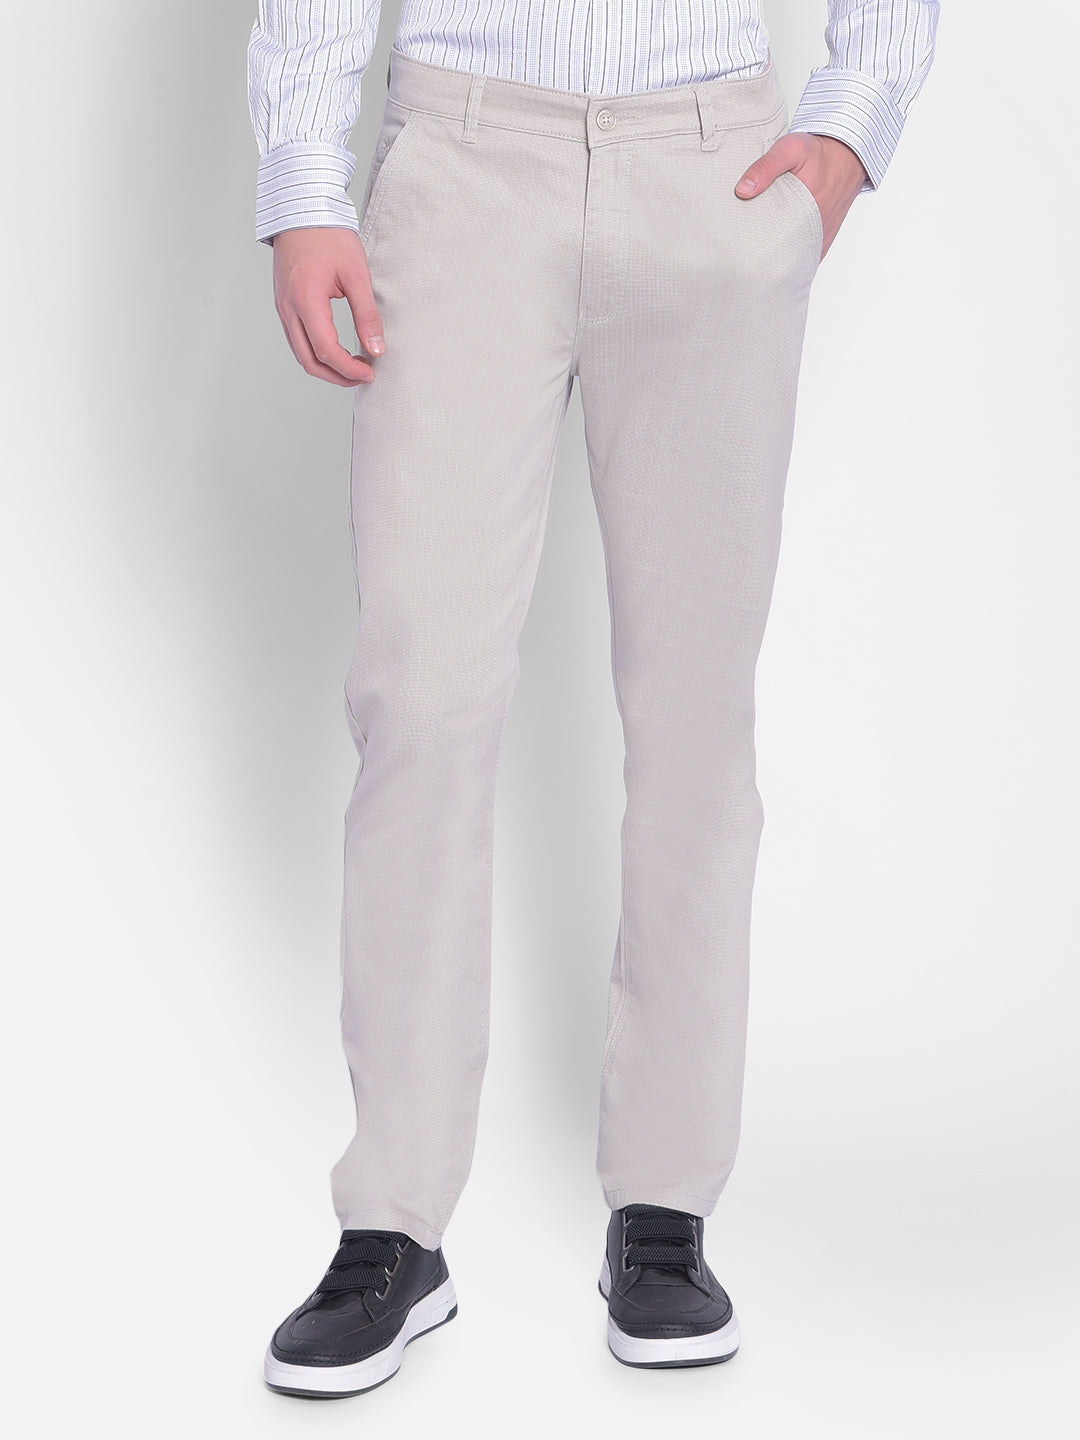 Grey Printed Trousers-Men Trousers-Crimsoune Club